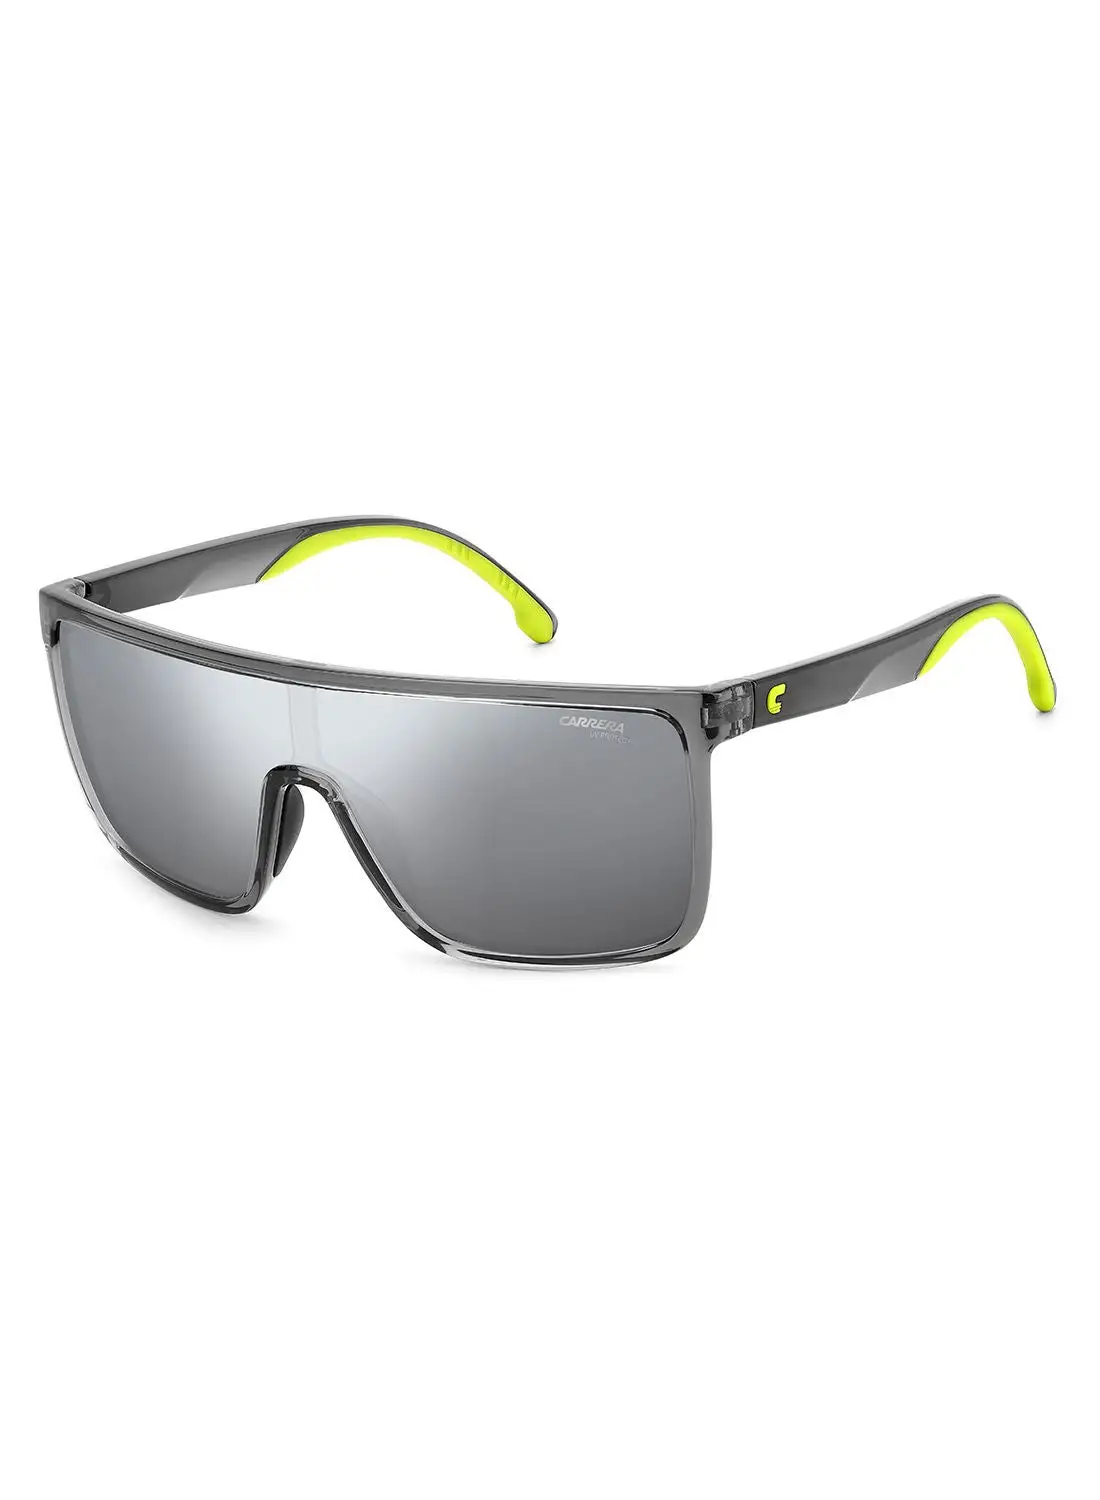 Carrera Unisex UV Protection Sunglasses - Carrera 8060/S Grey/Green 99 - Lens Size: 99 Mm